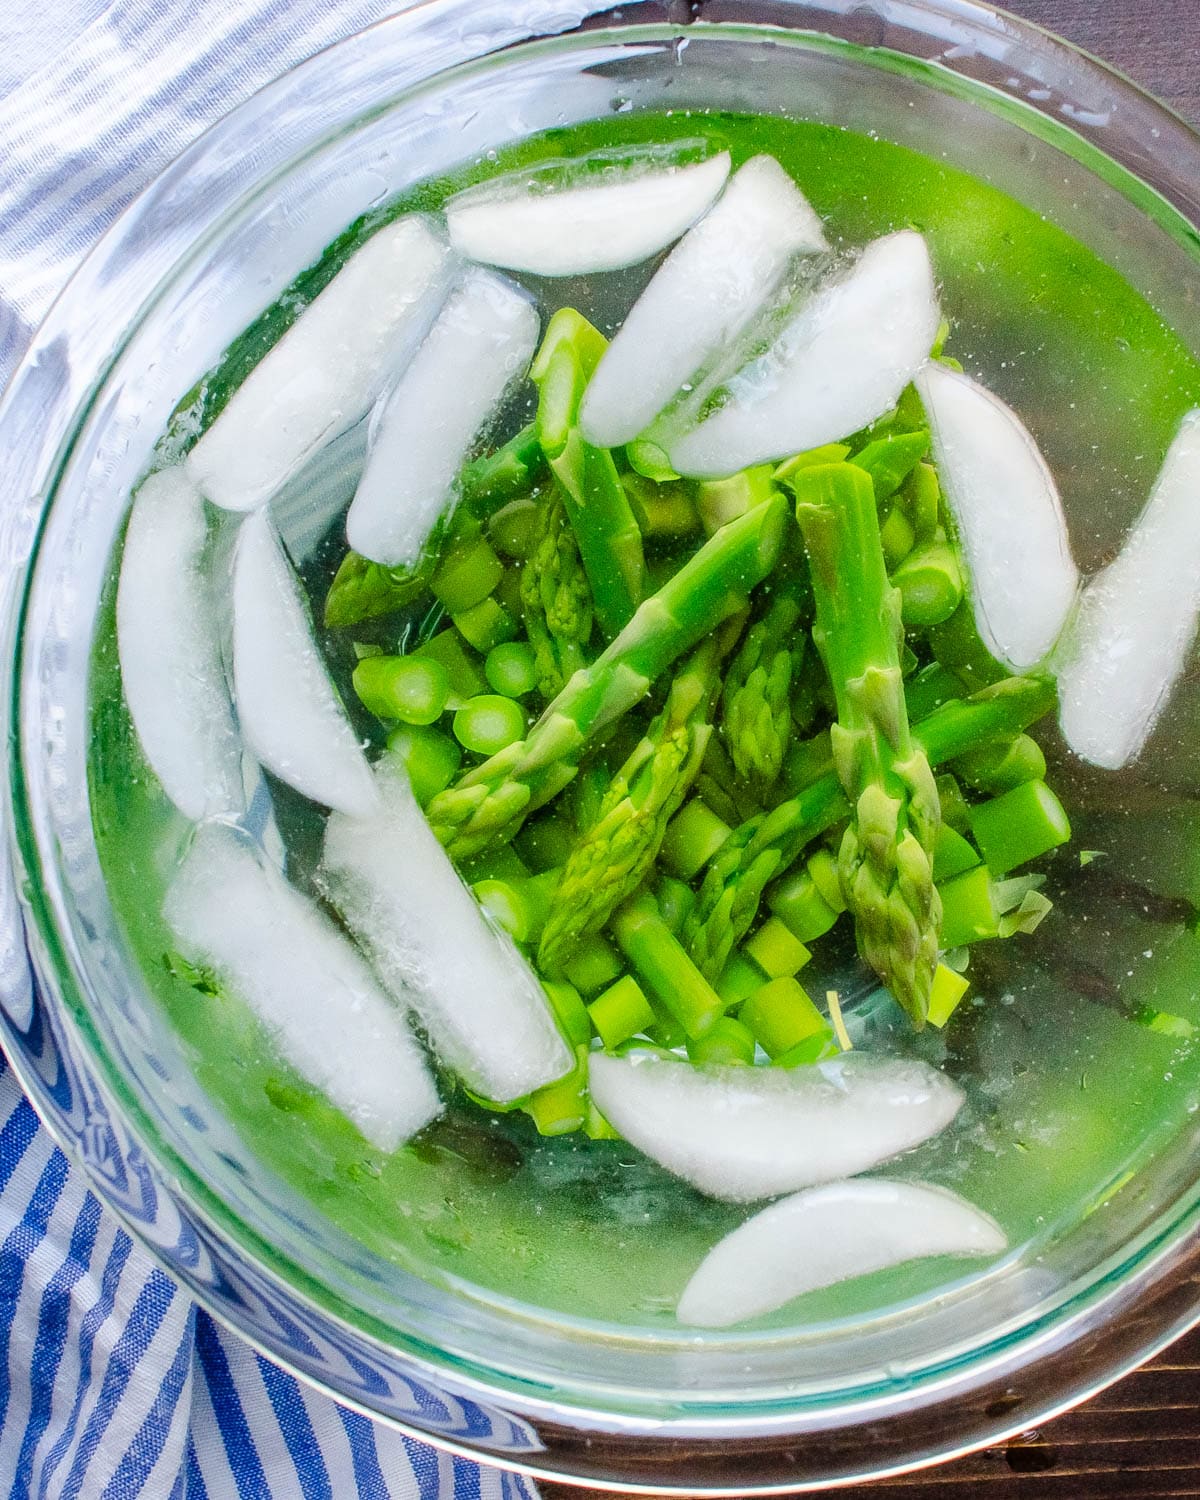 shocking the asparagus in an ice bath.